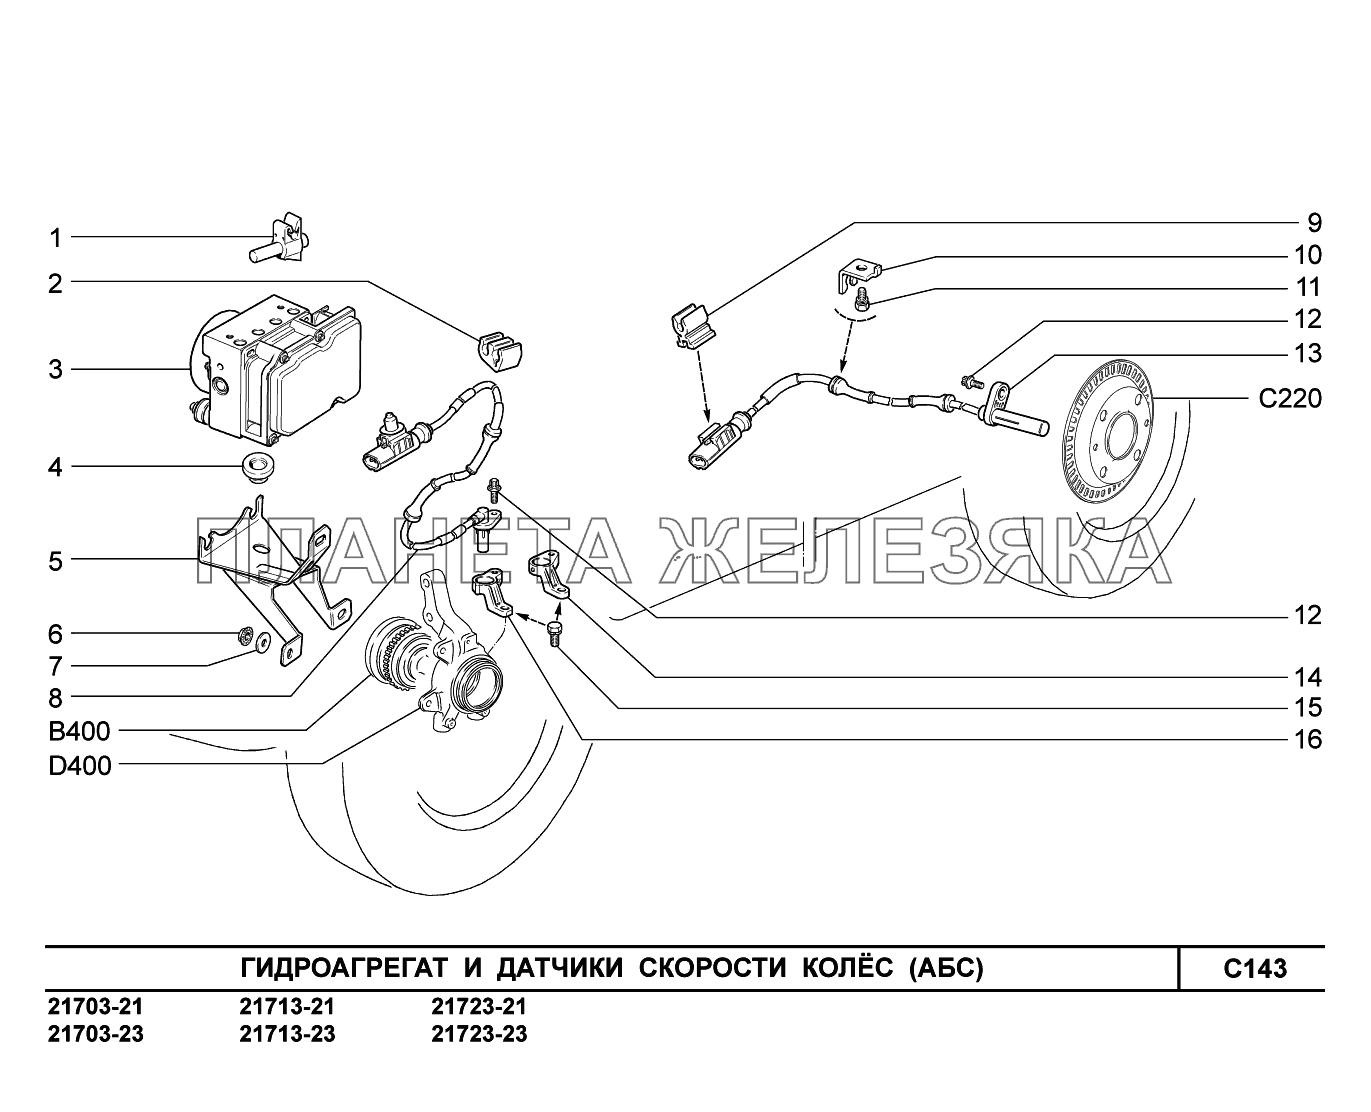 C143. Гидроагрегат и датчики скорости колес ВАЗ-2170 